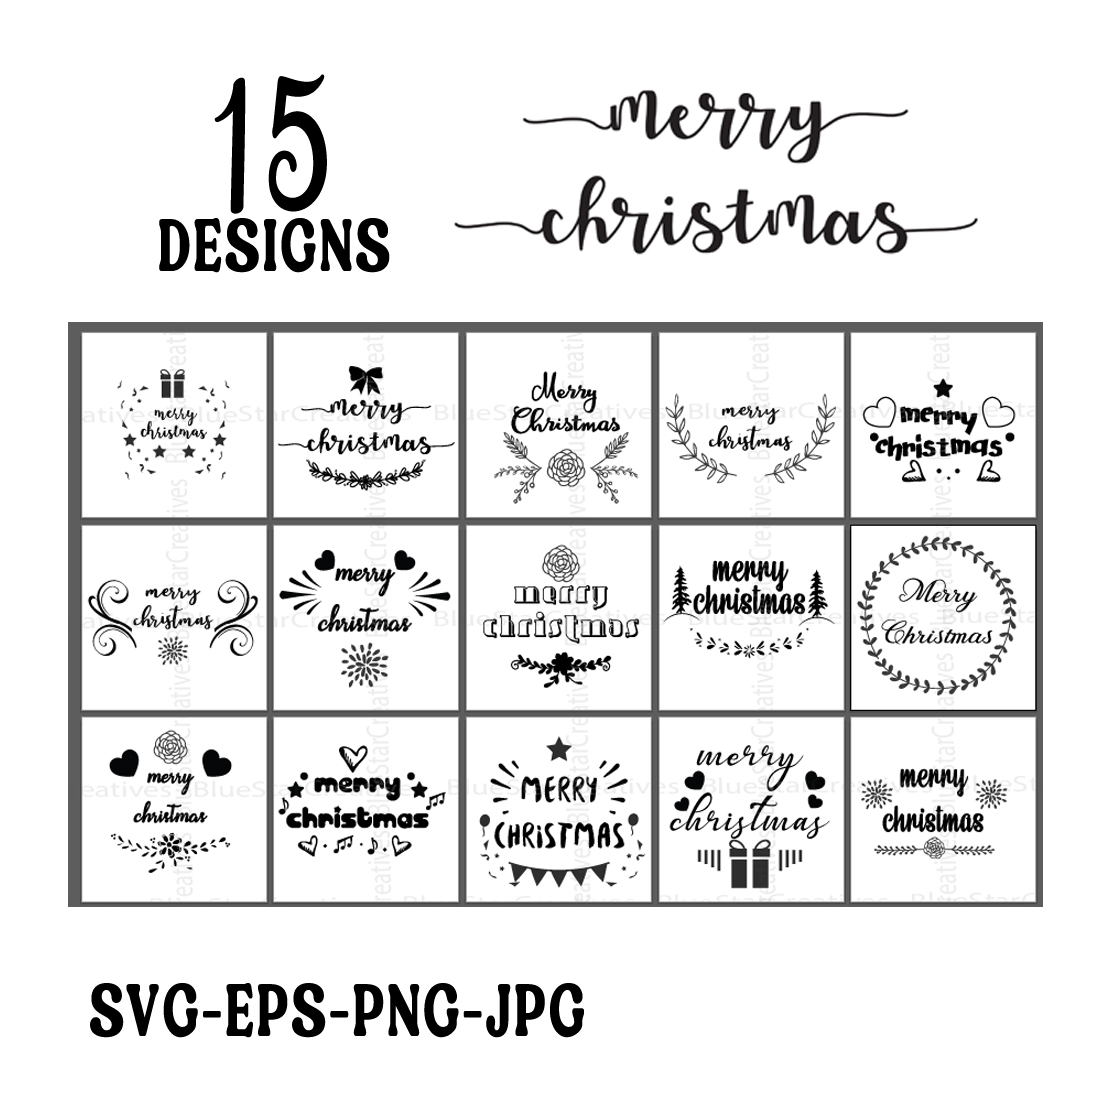 Merry Christmas Bundle-SVG-EPS-PNG-JPG cover image.